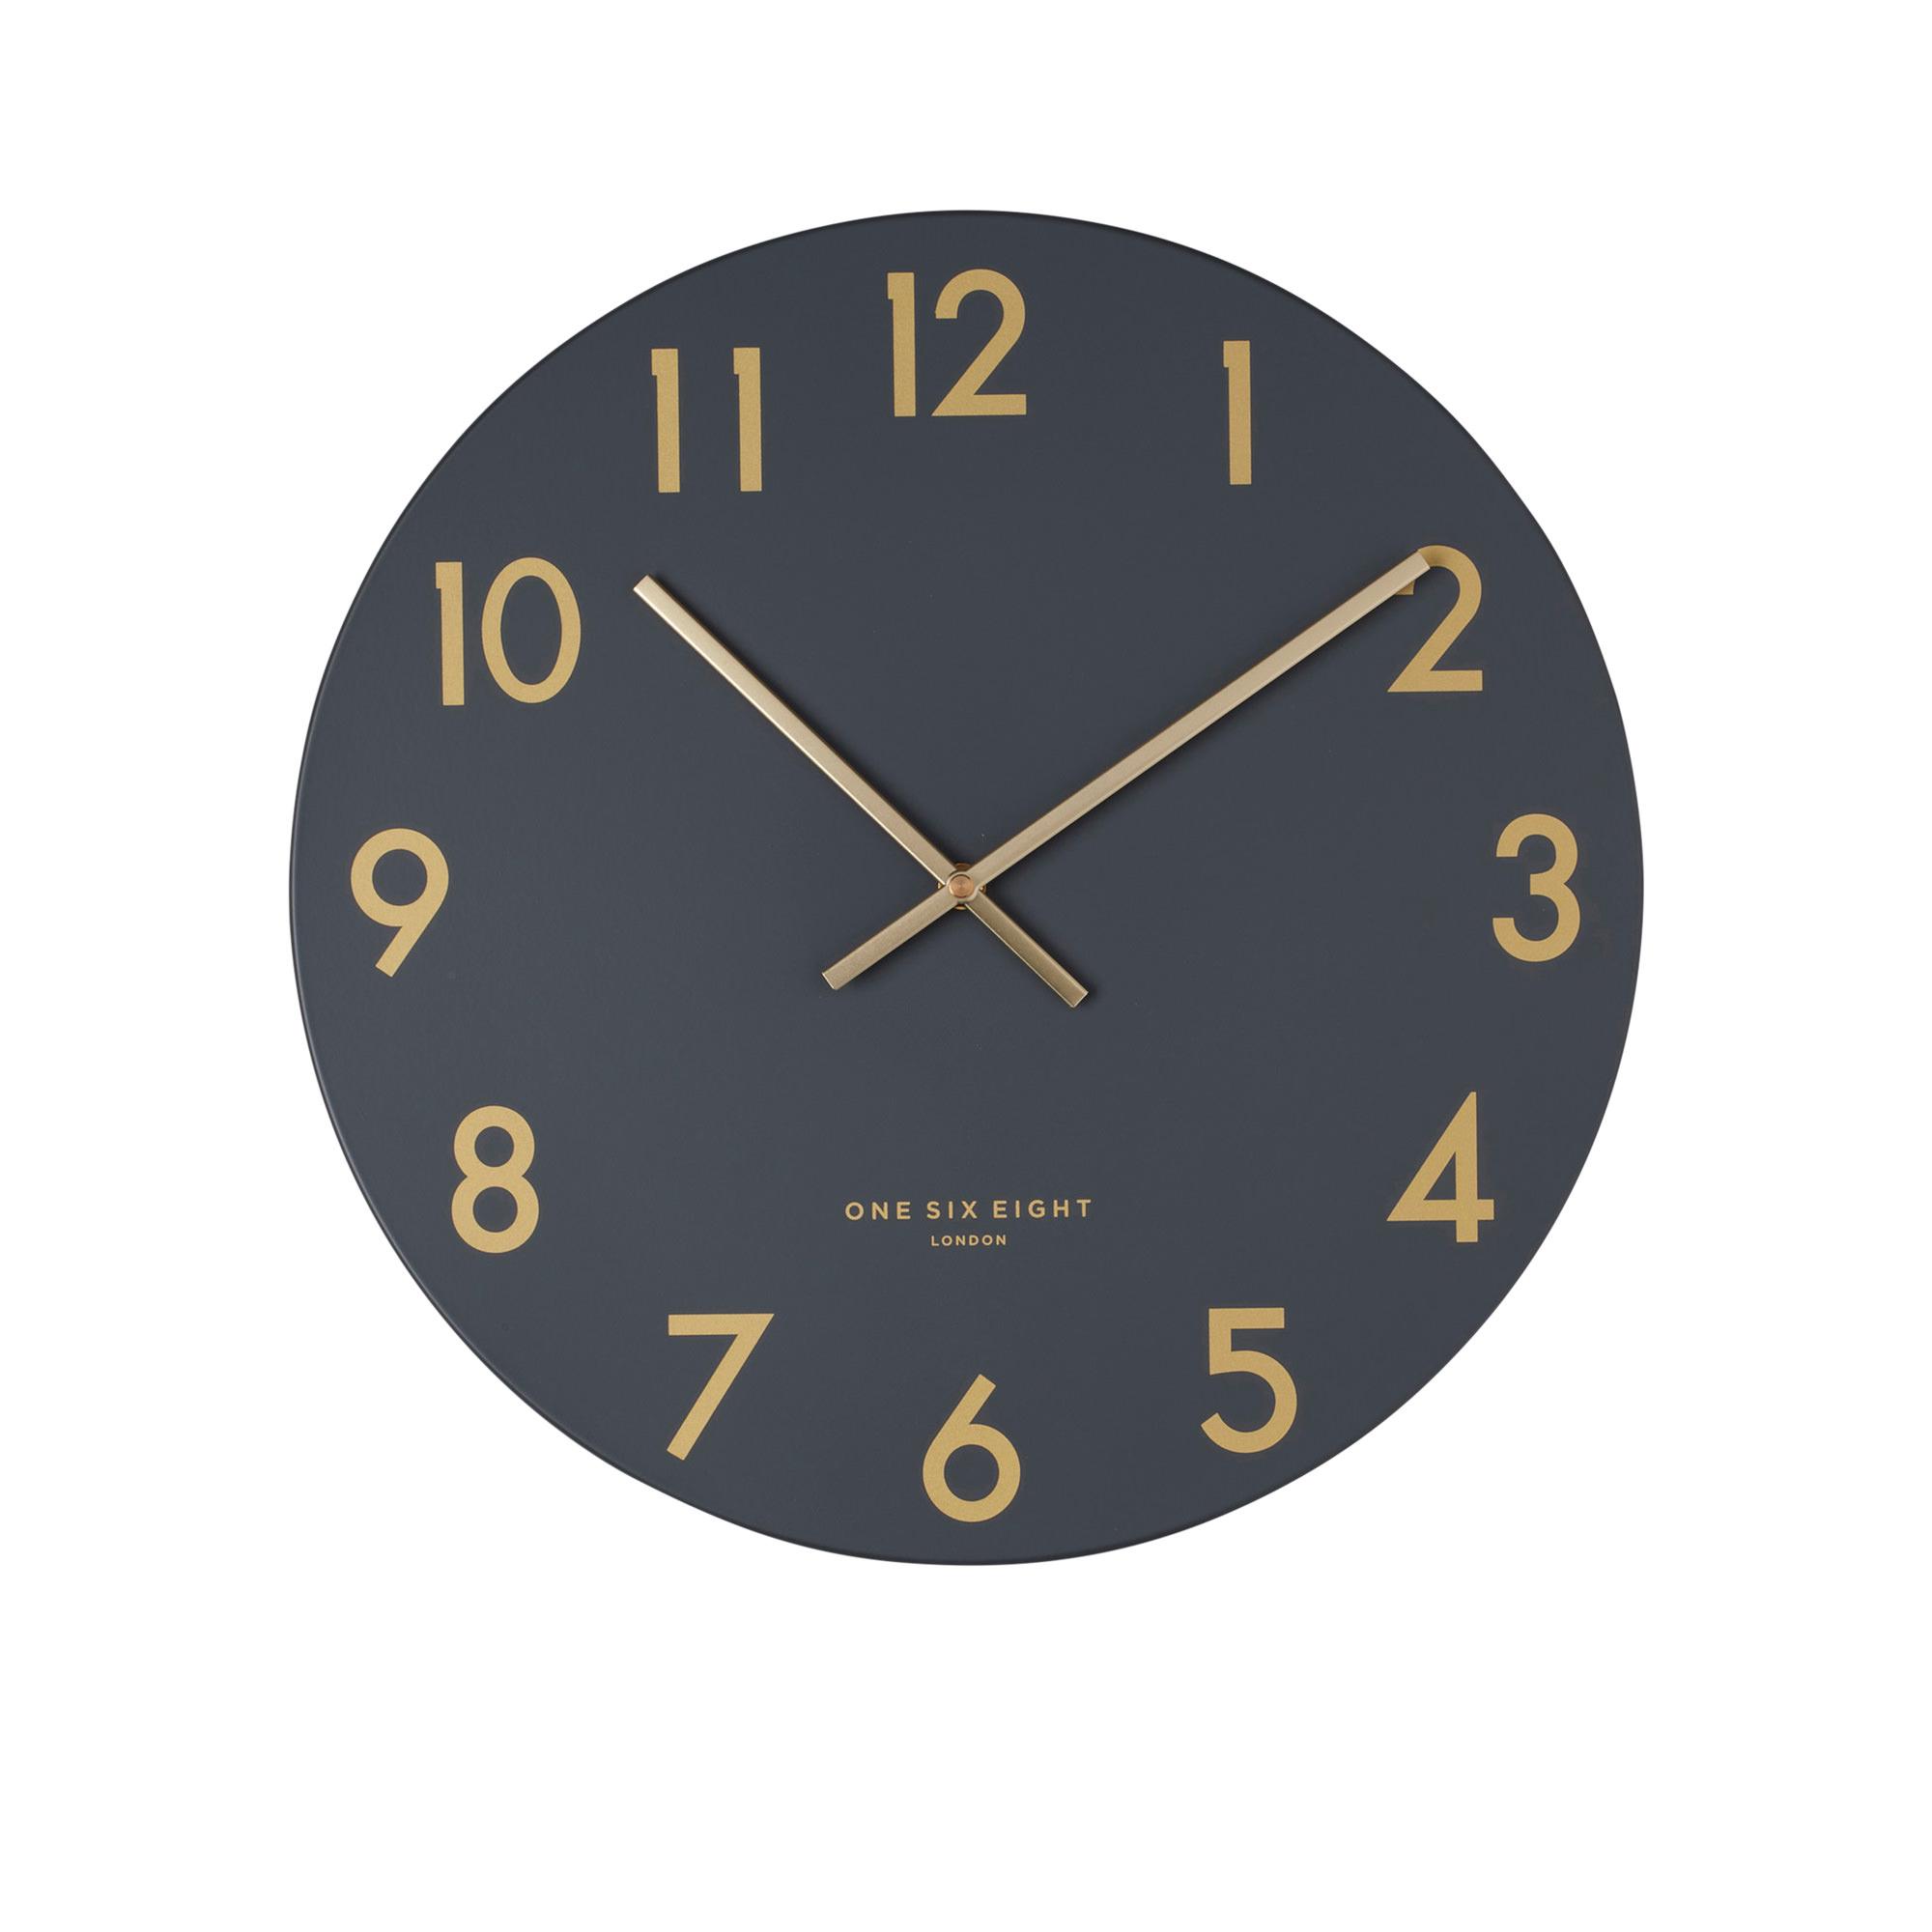 One Six Eight London Jones Silent Wall Clock 30cm Charcoal Grey Image 1